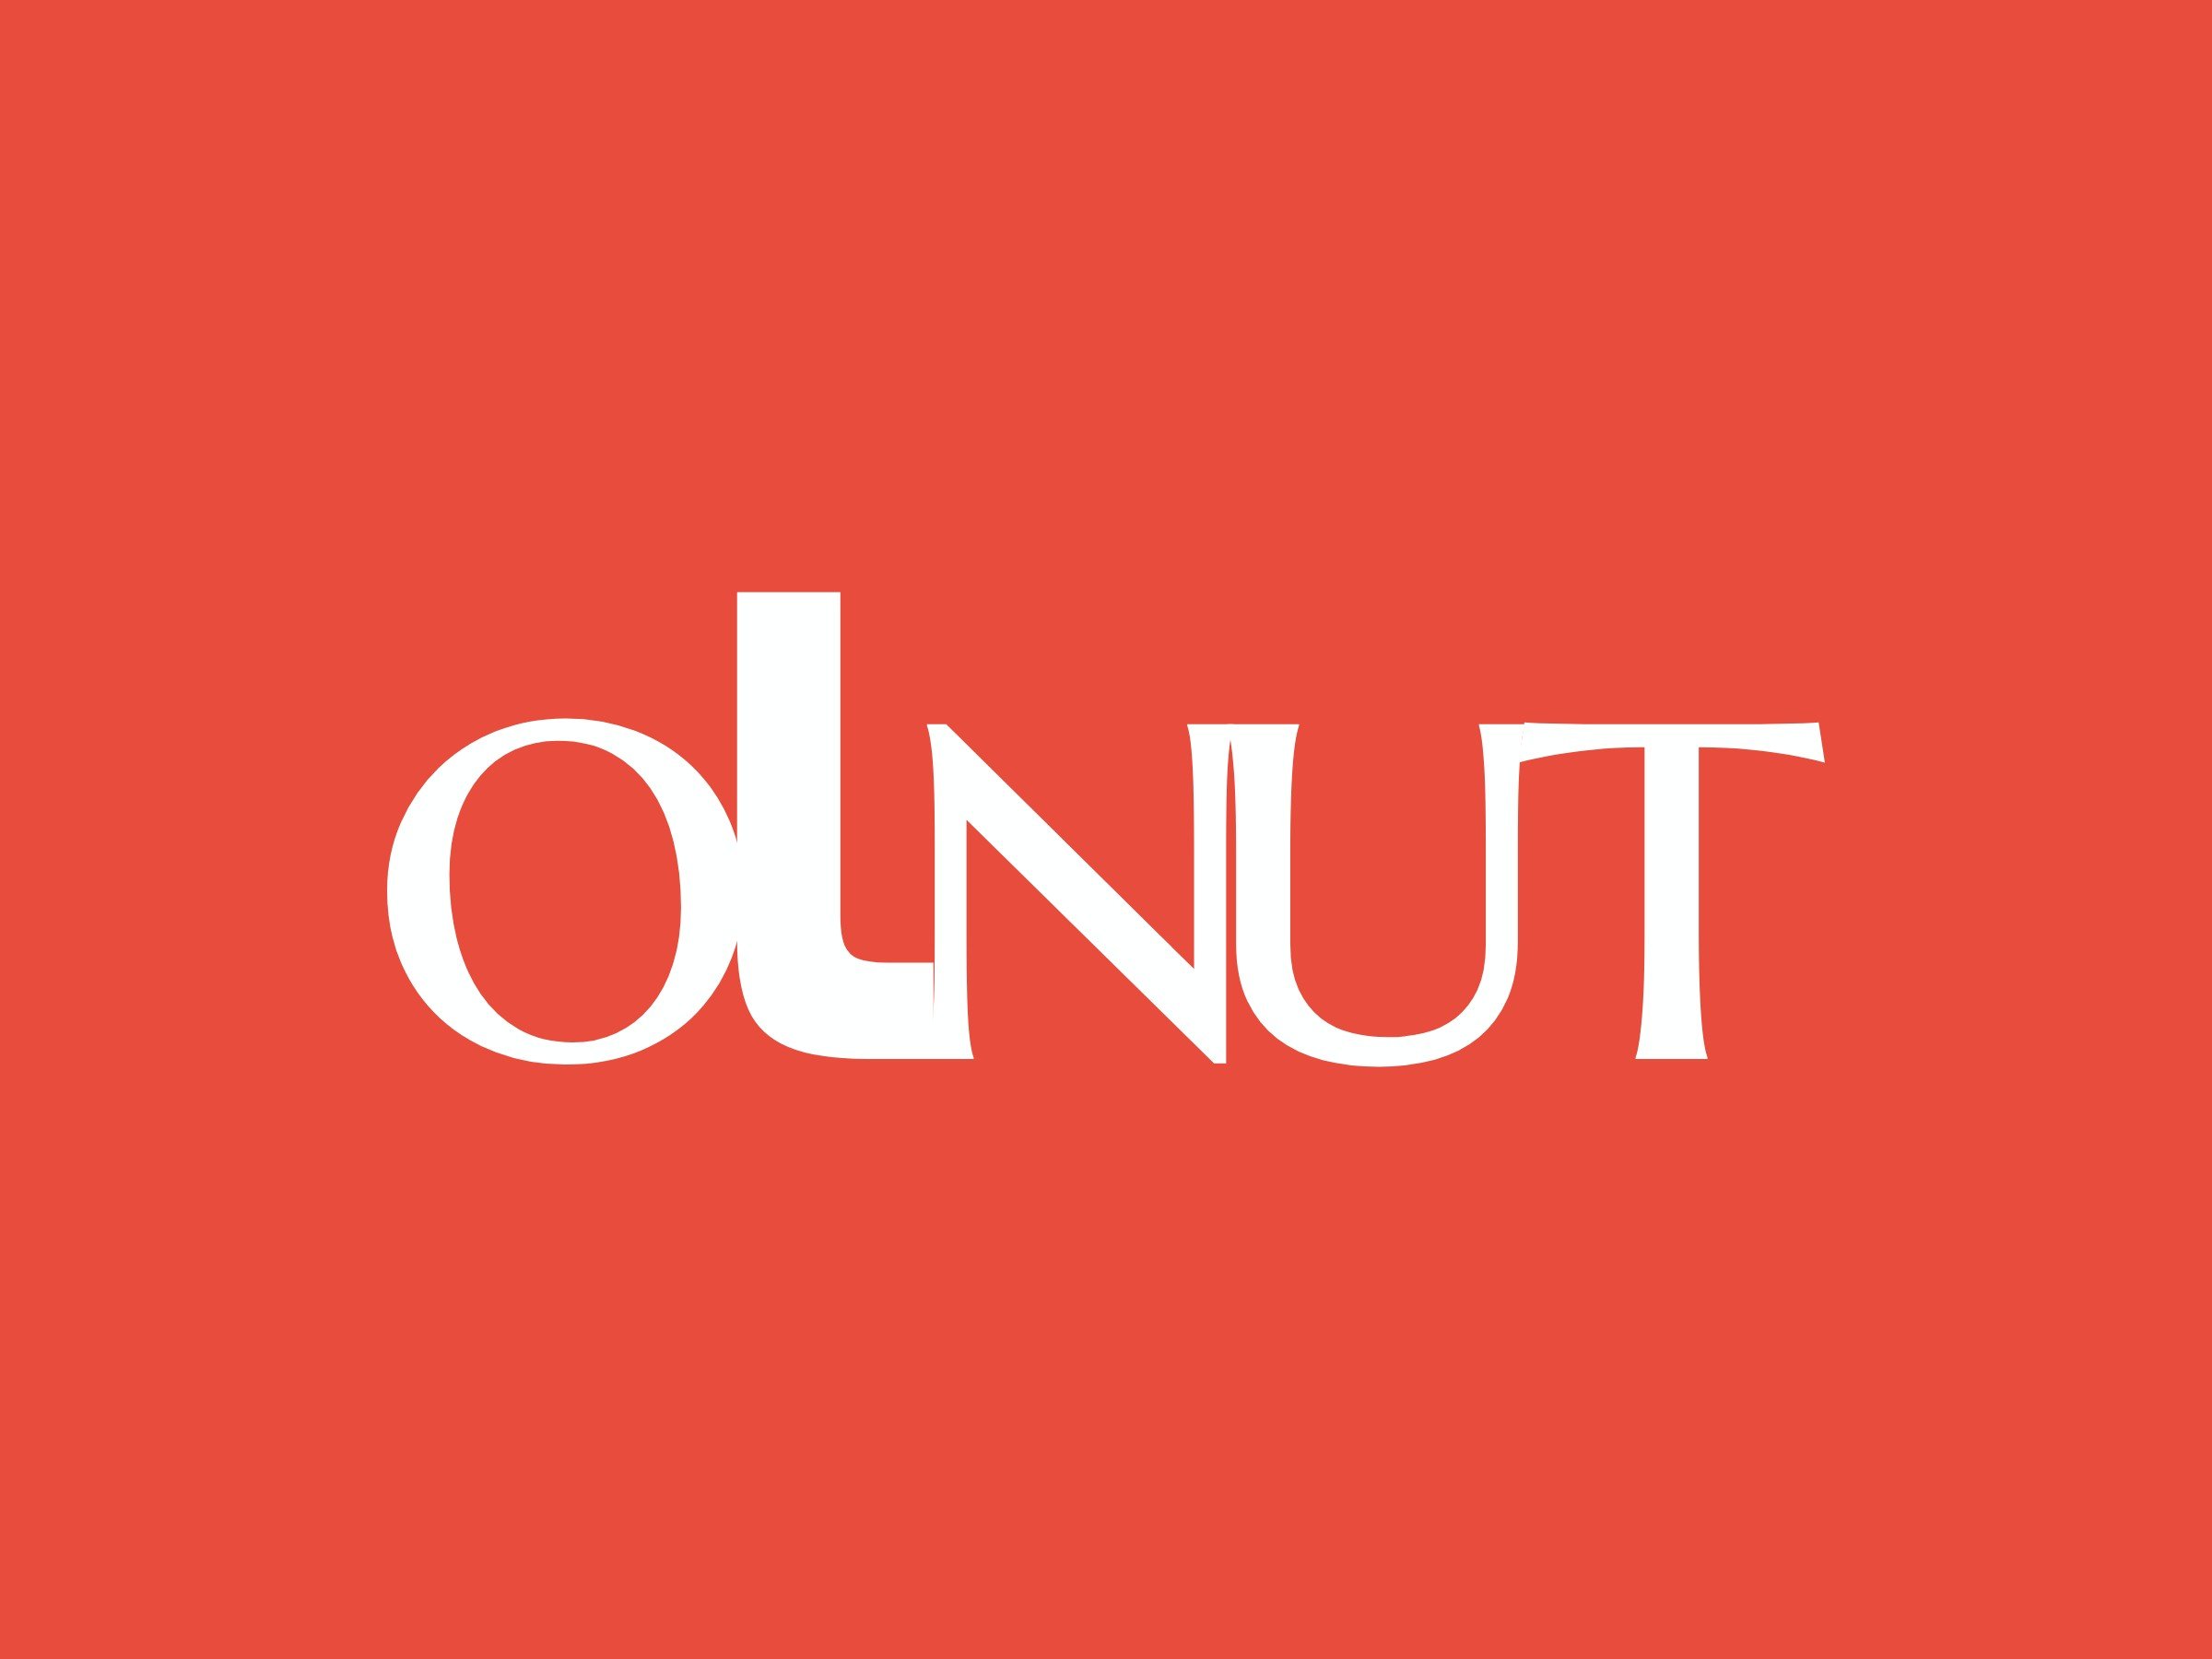 olnut logo design